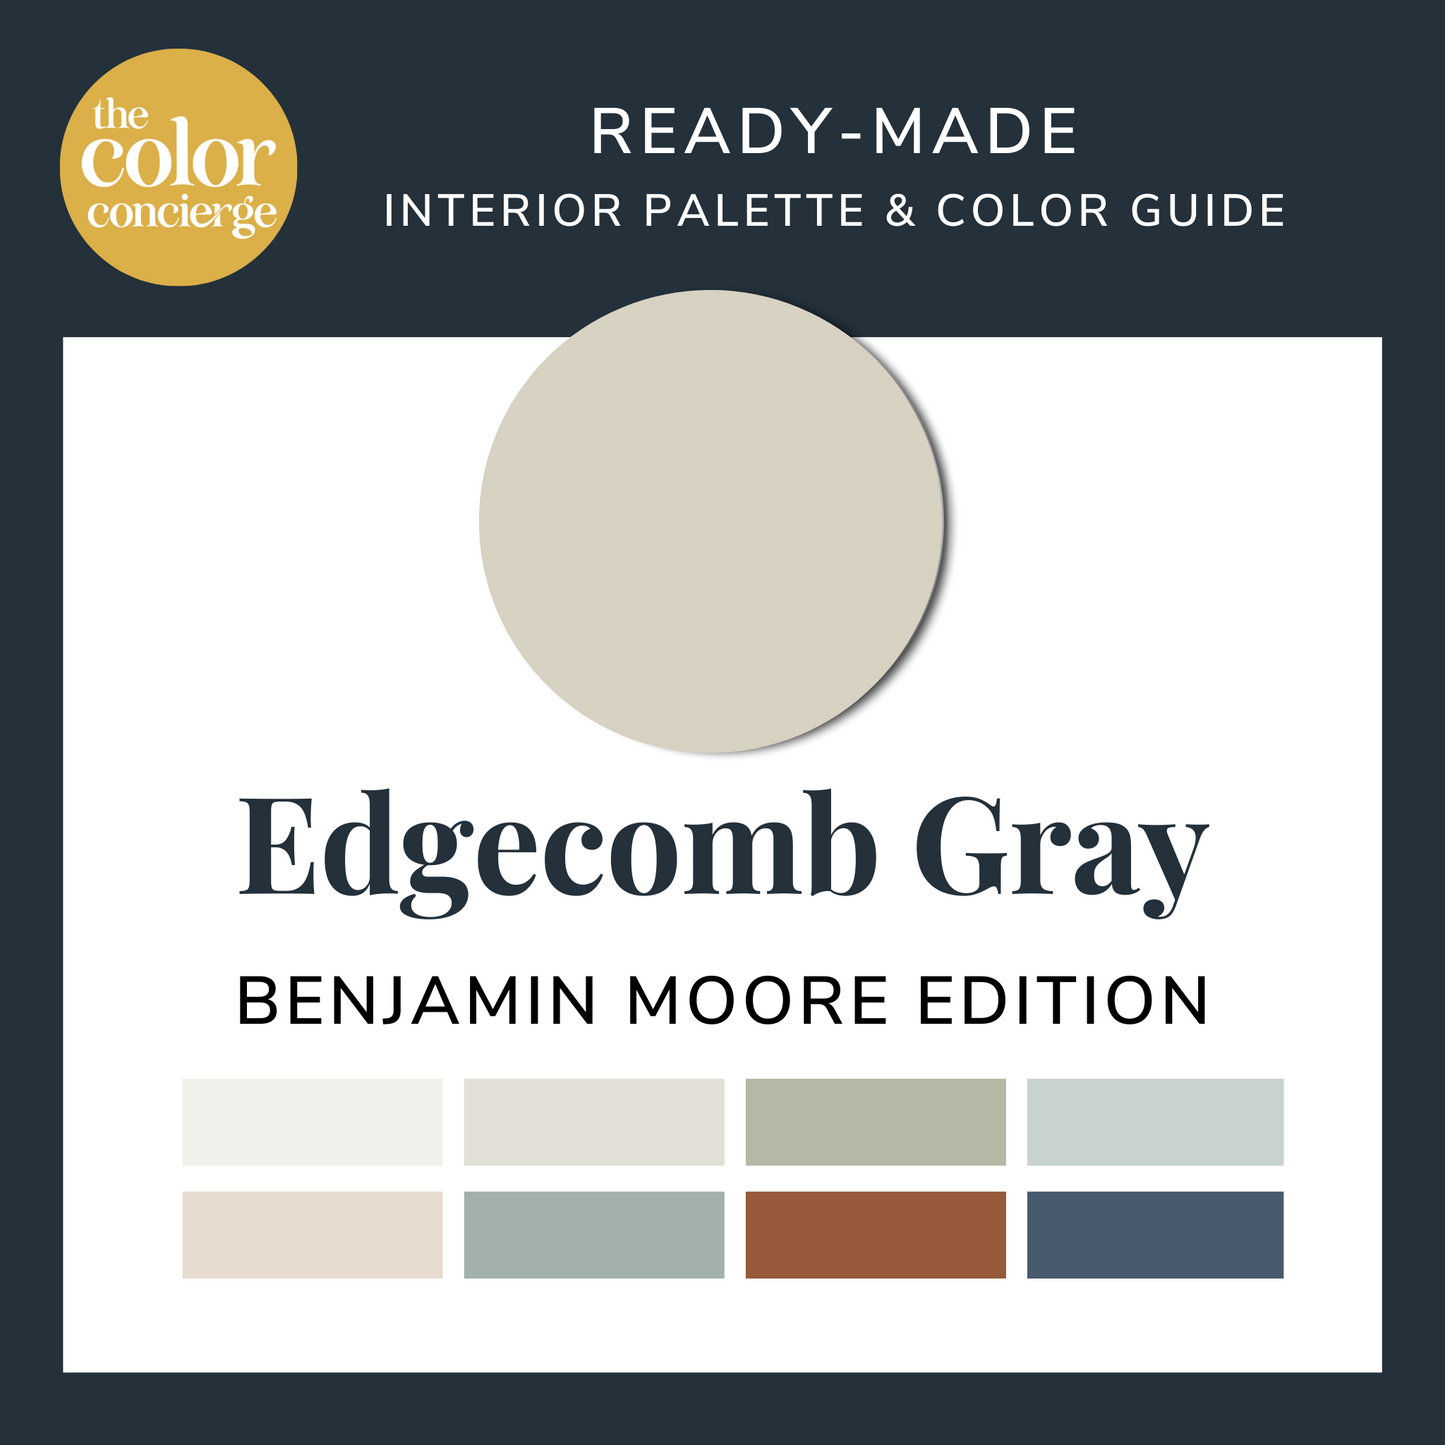 Benjamin Moore Edgecomb Gray color palette guide